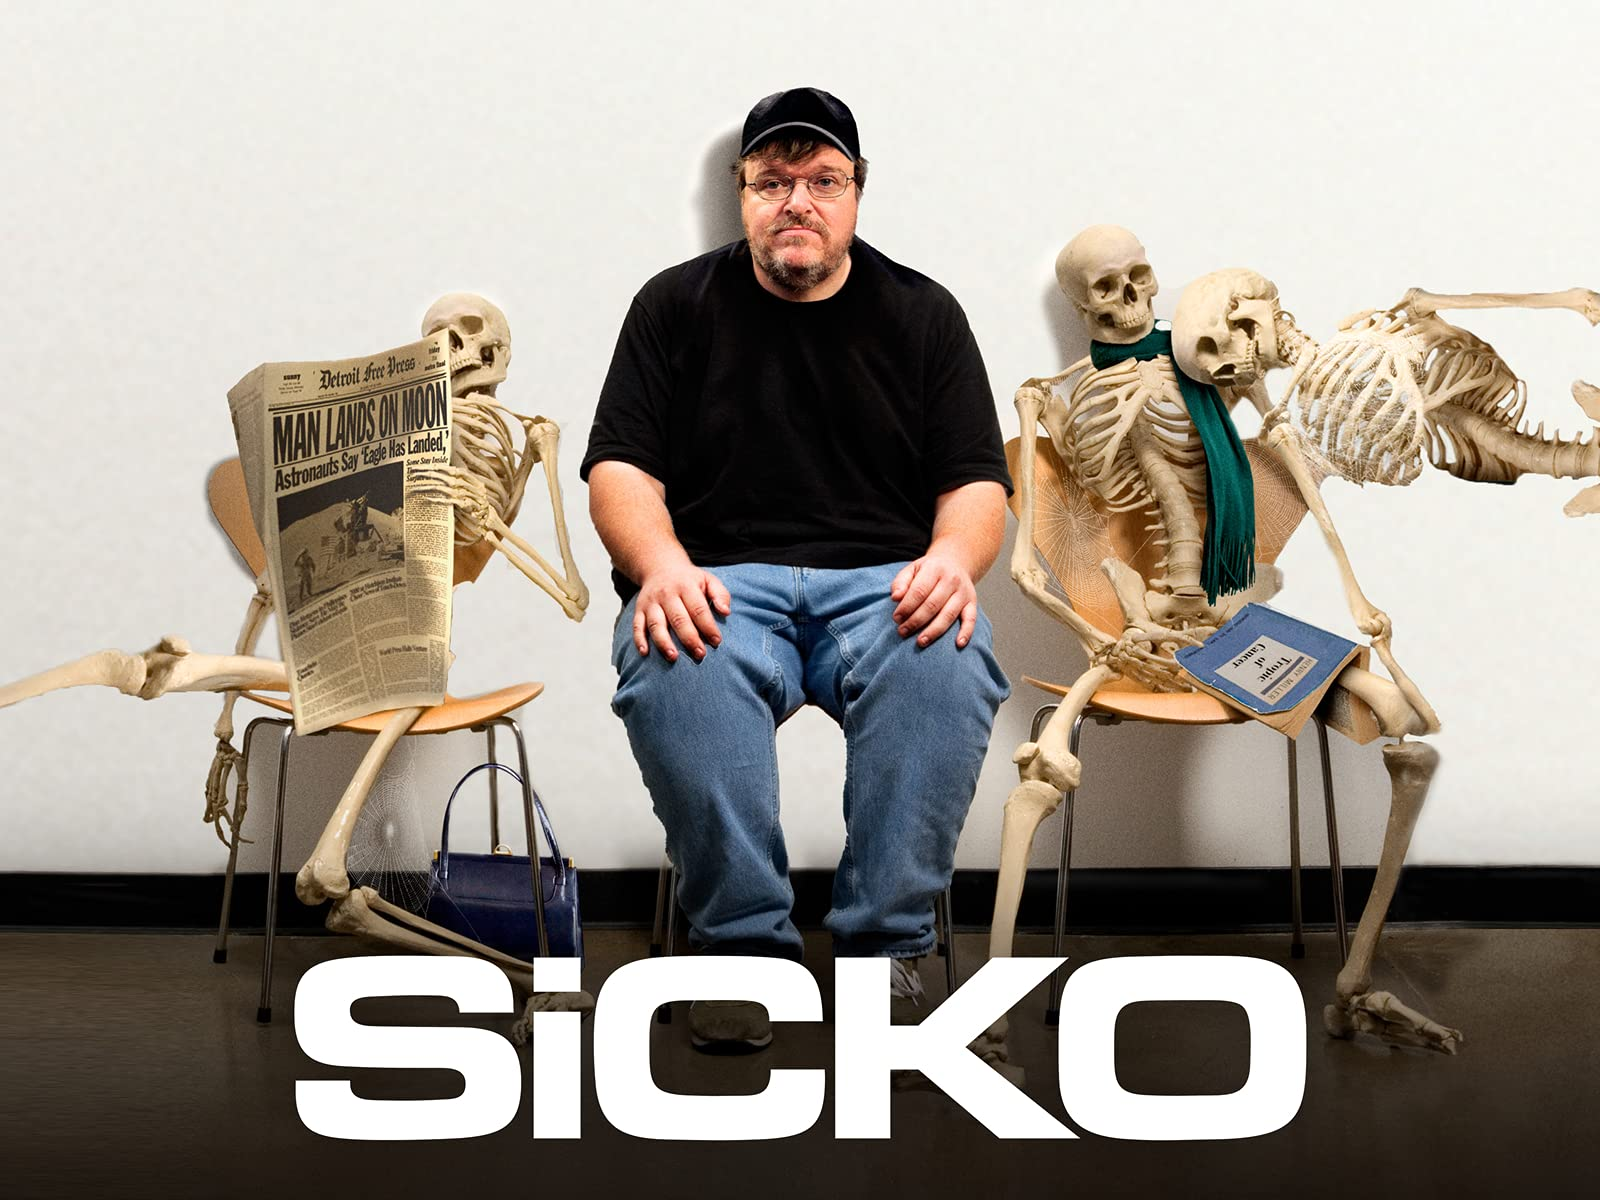 Sicko (2007) HUN Sub - Michael Moore